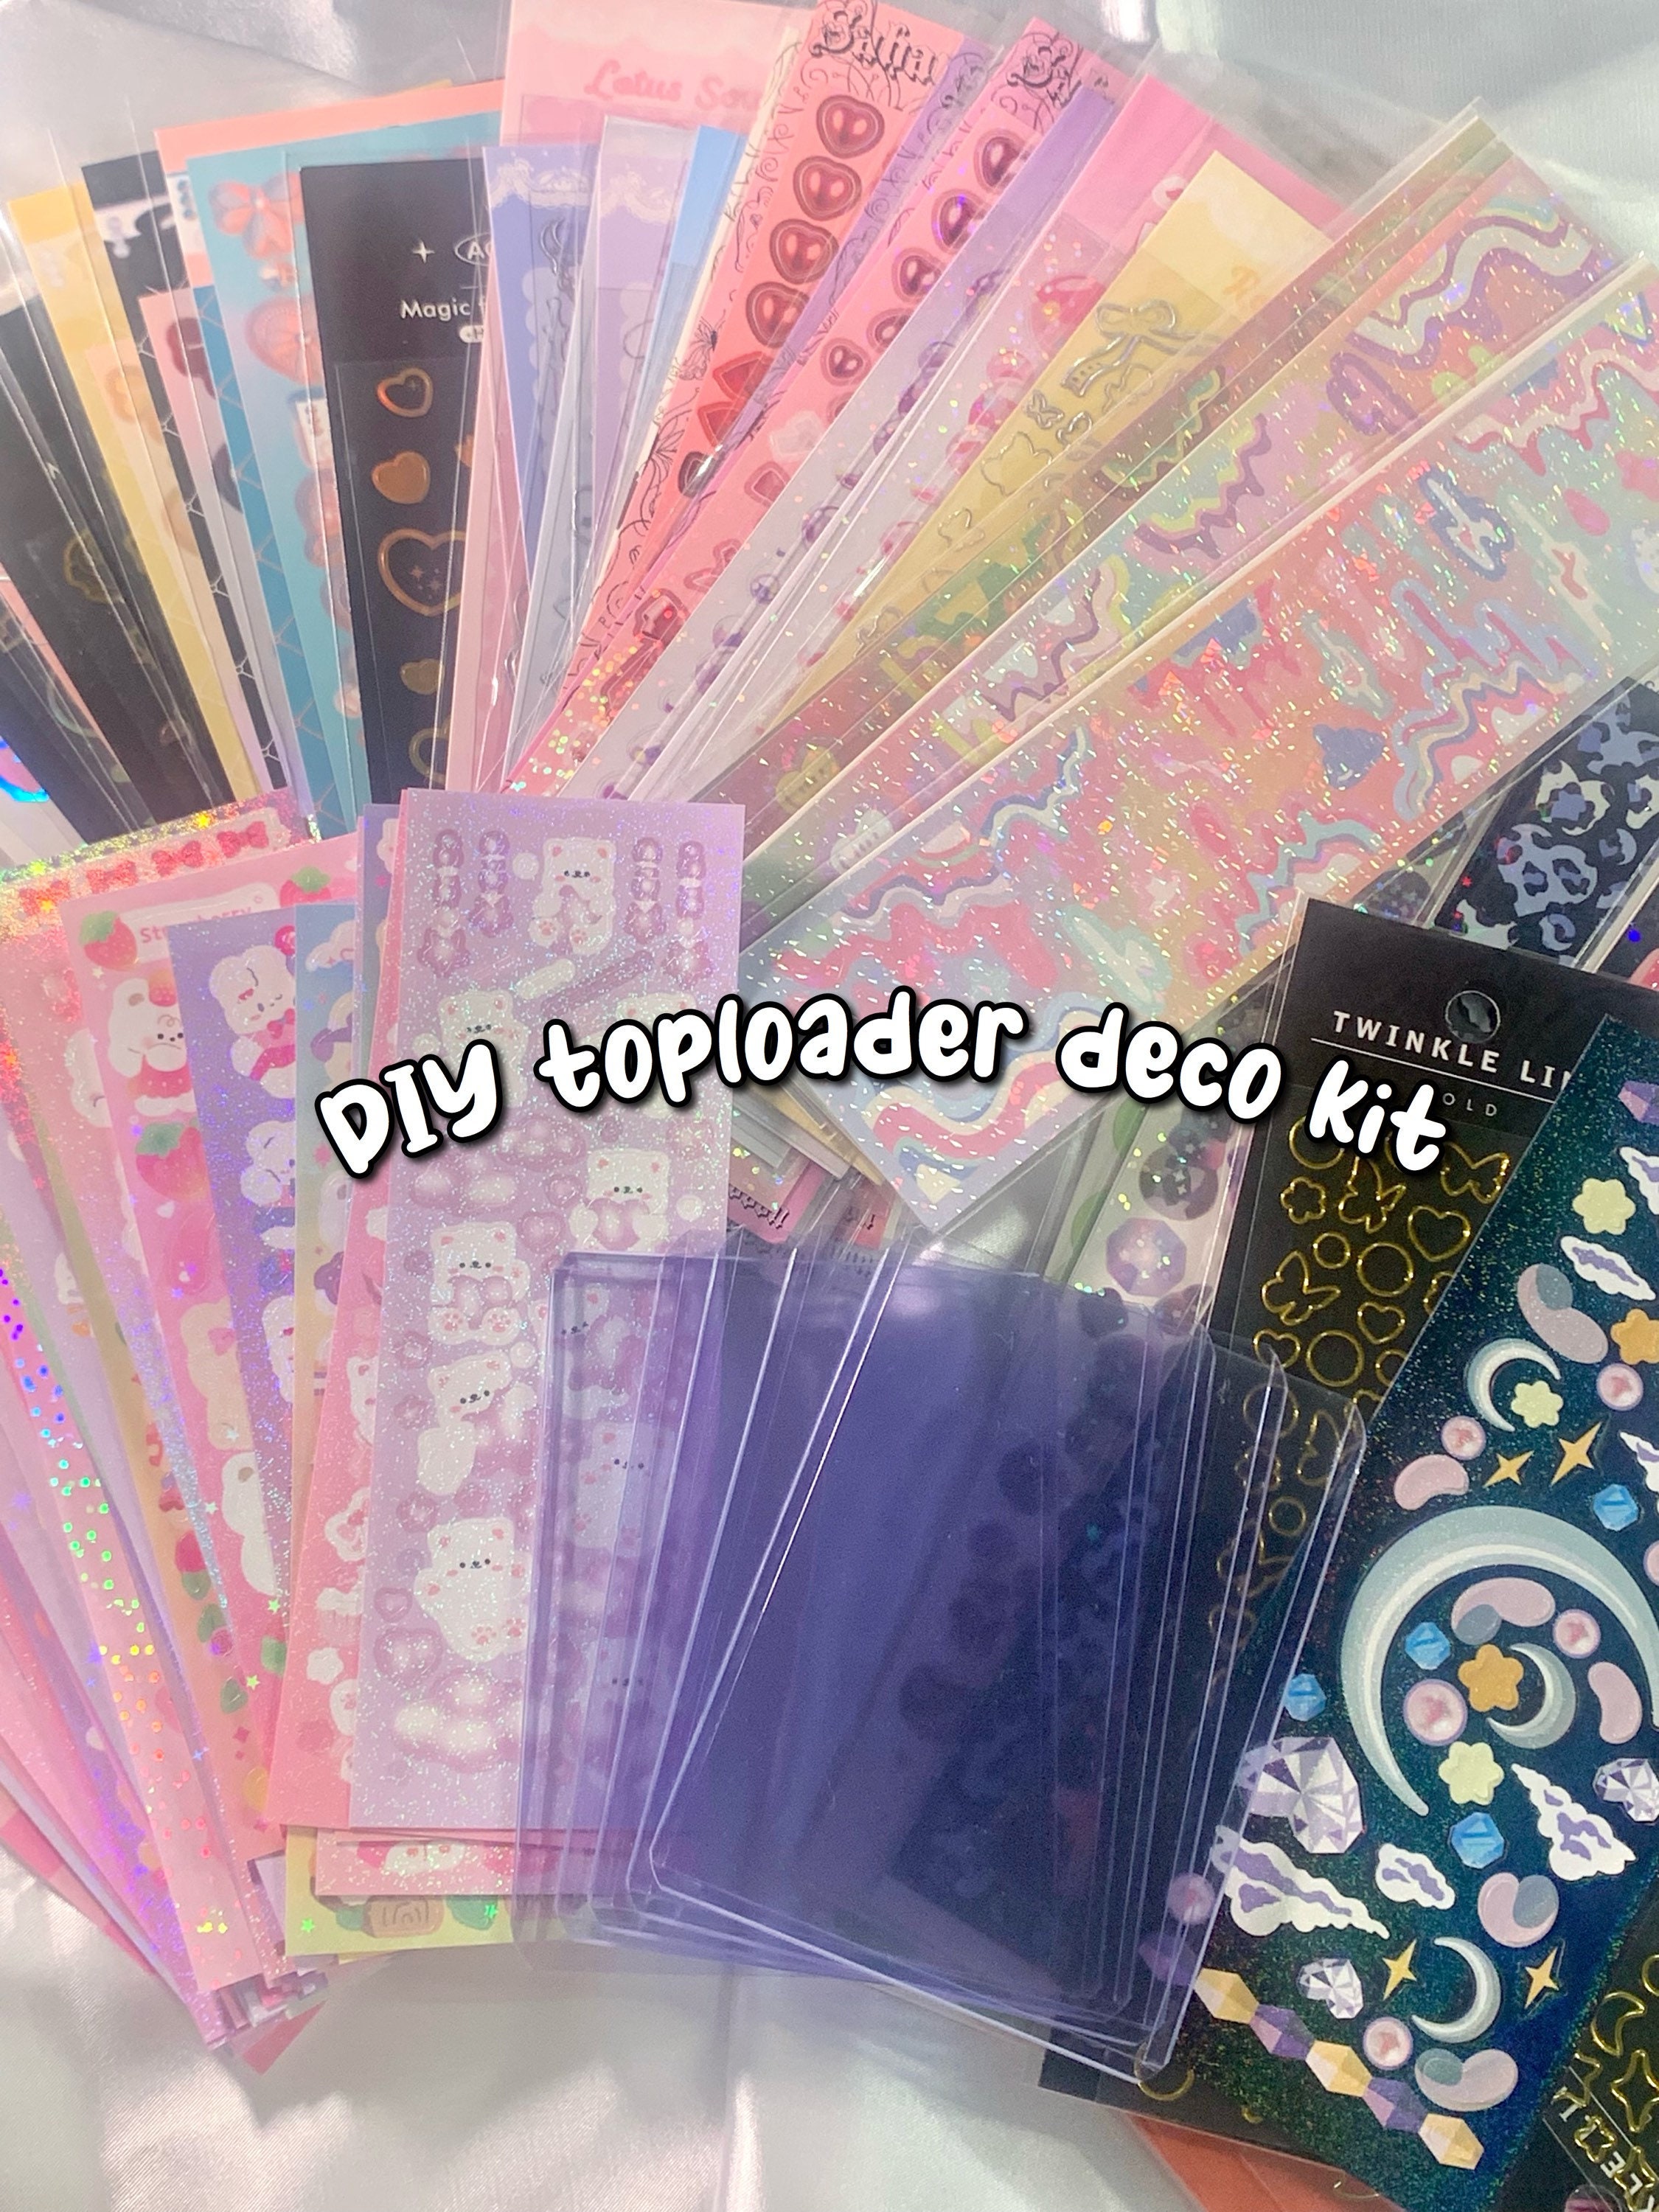 DIY Toploader Deco Kit read Description Kpop Bts Stationary